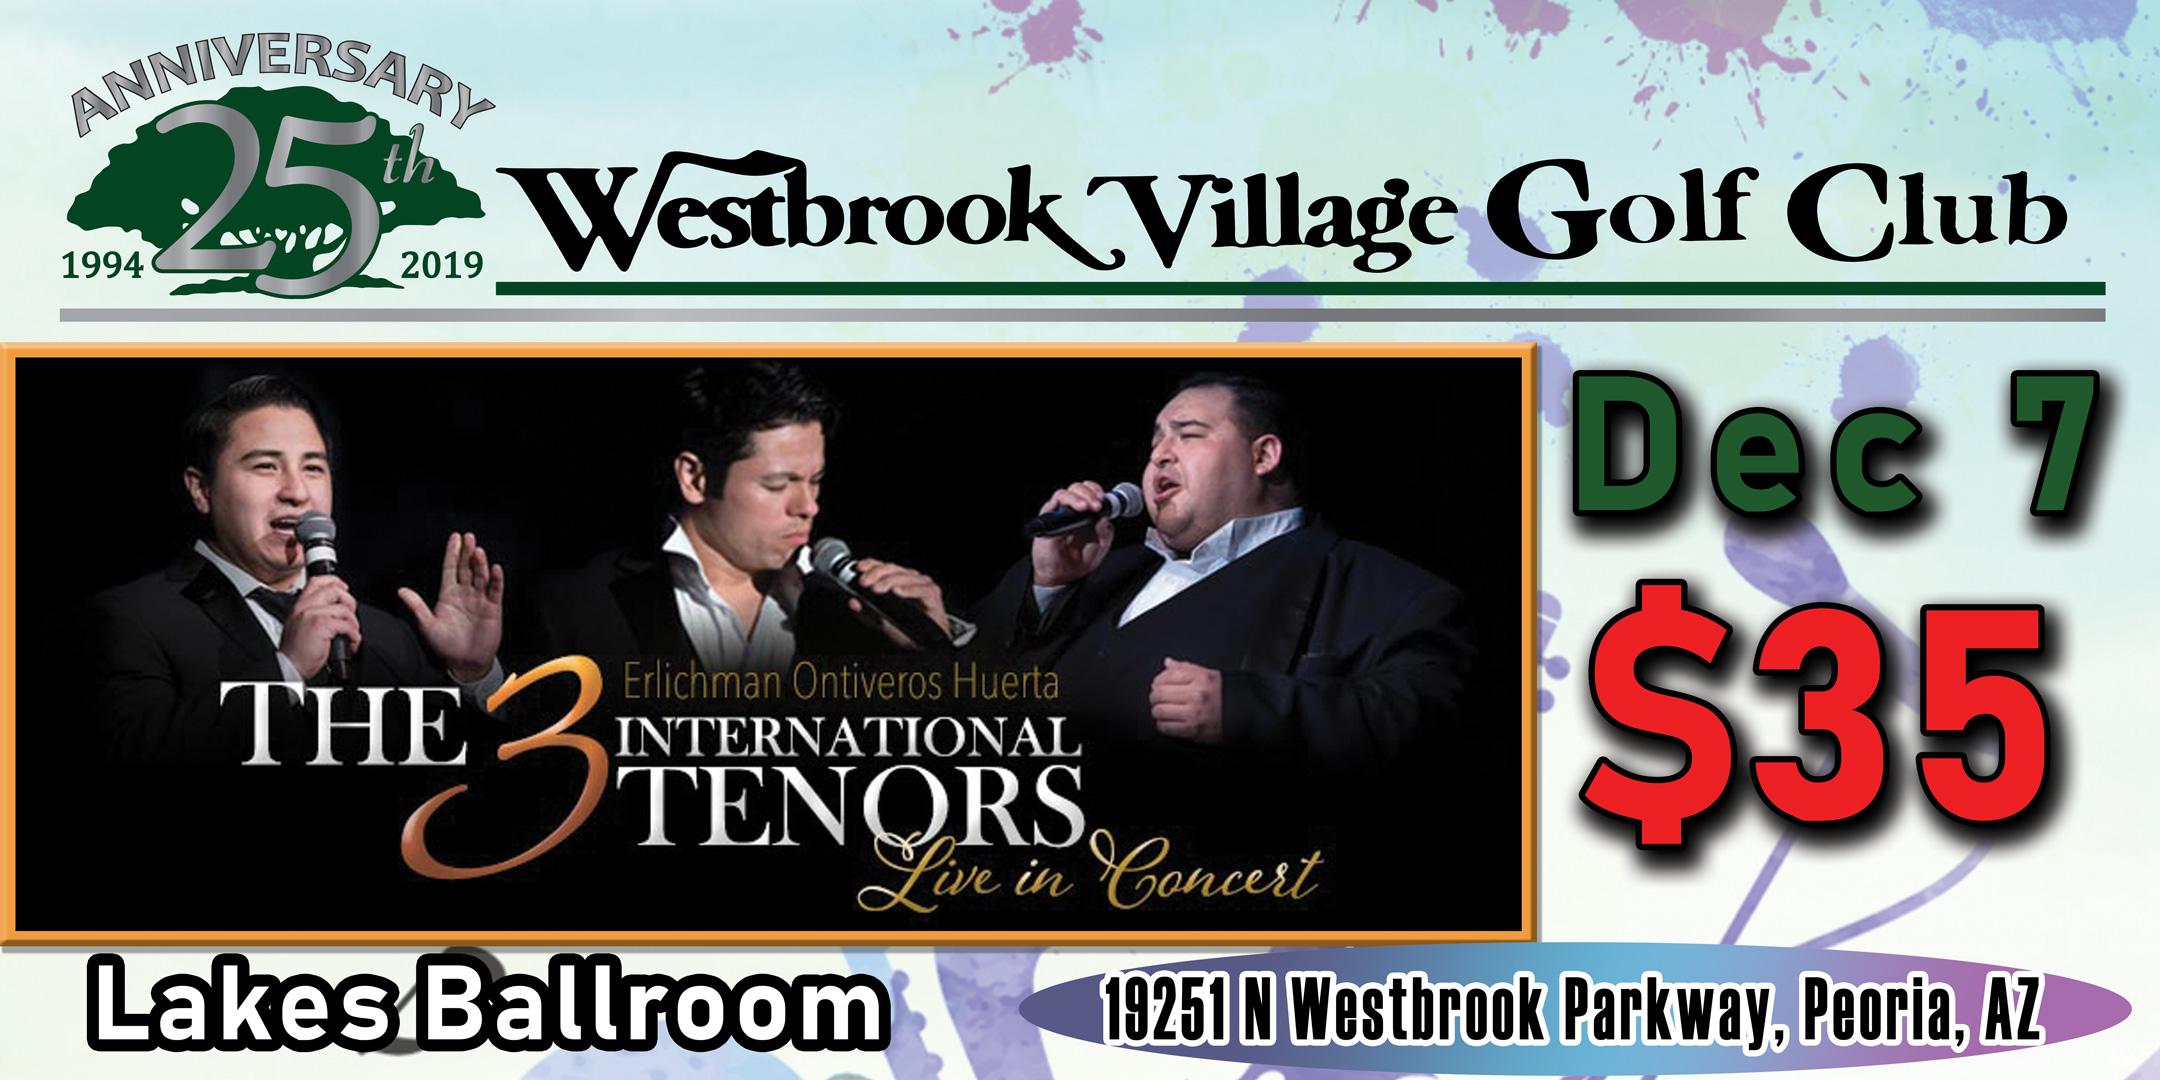 The 3 International Tenors at Westbrook Village Golf Club